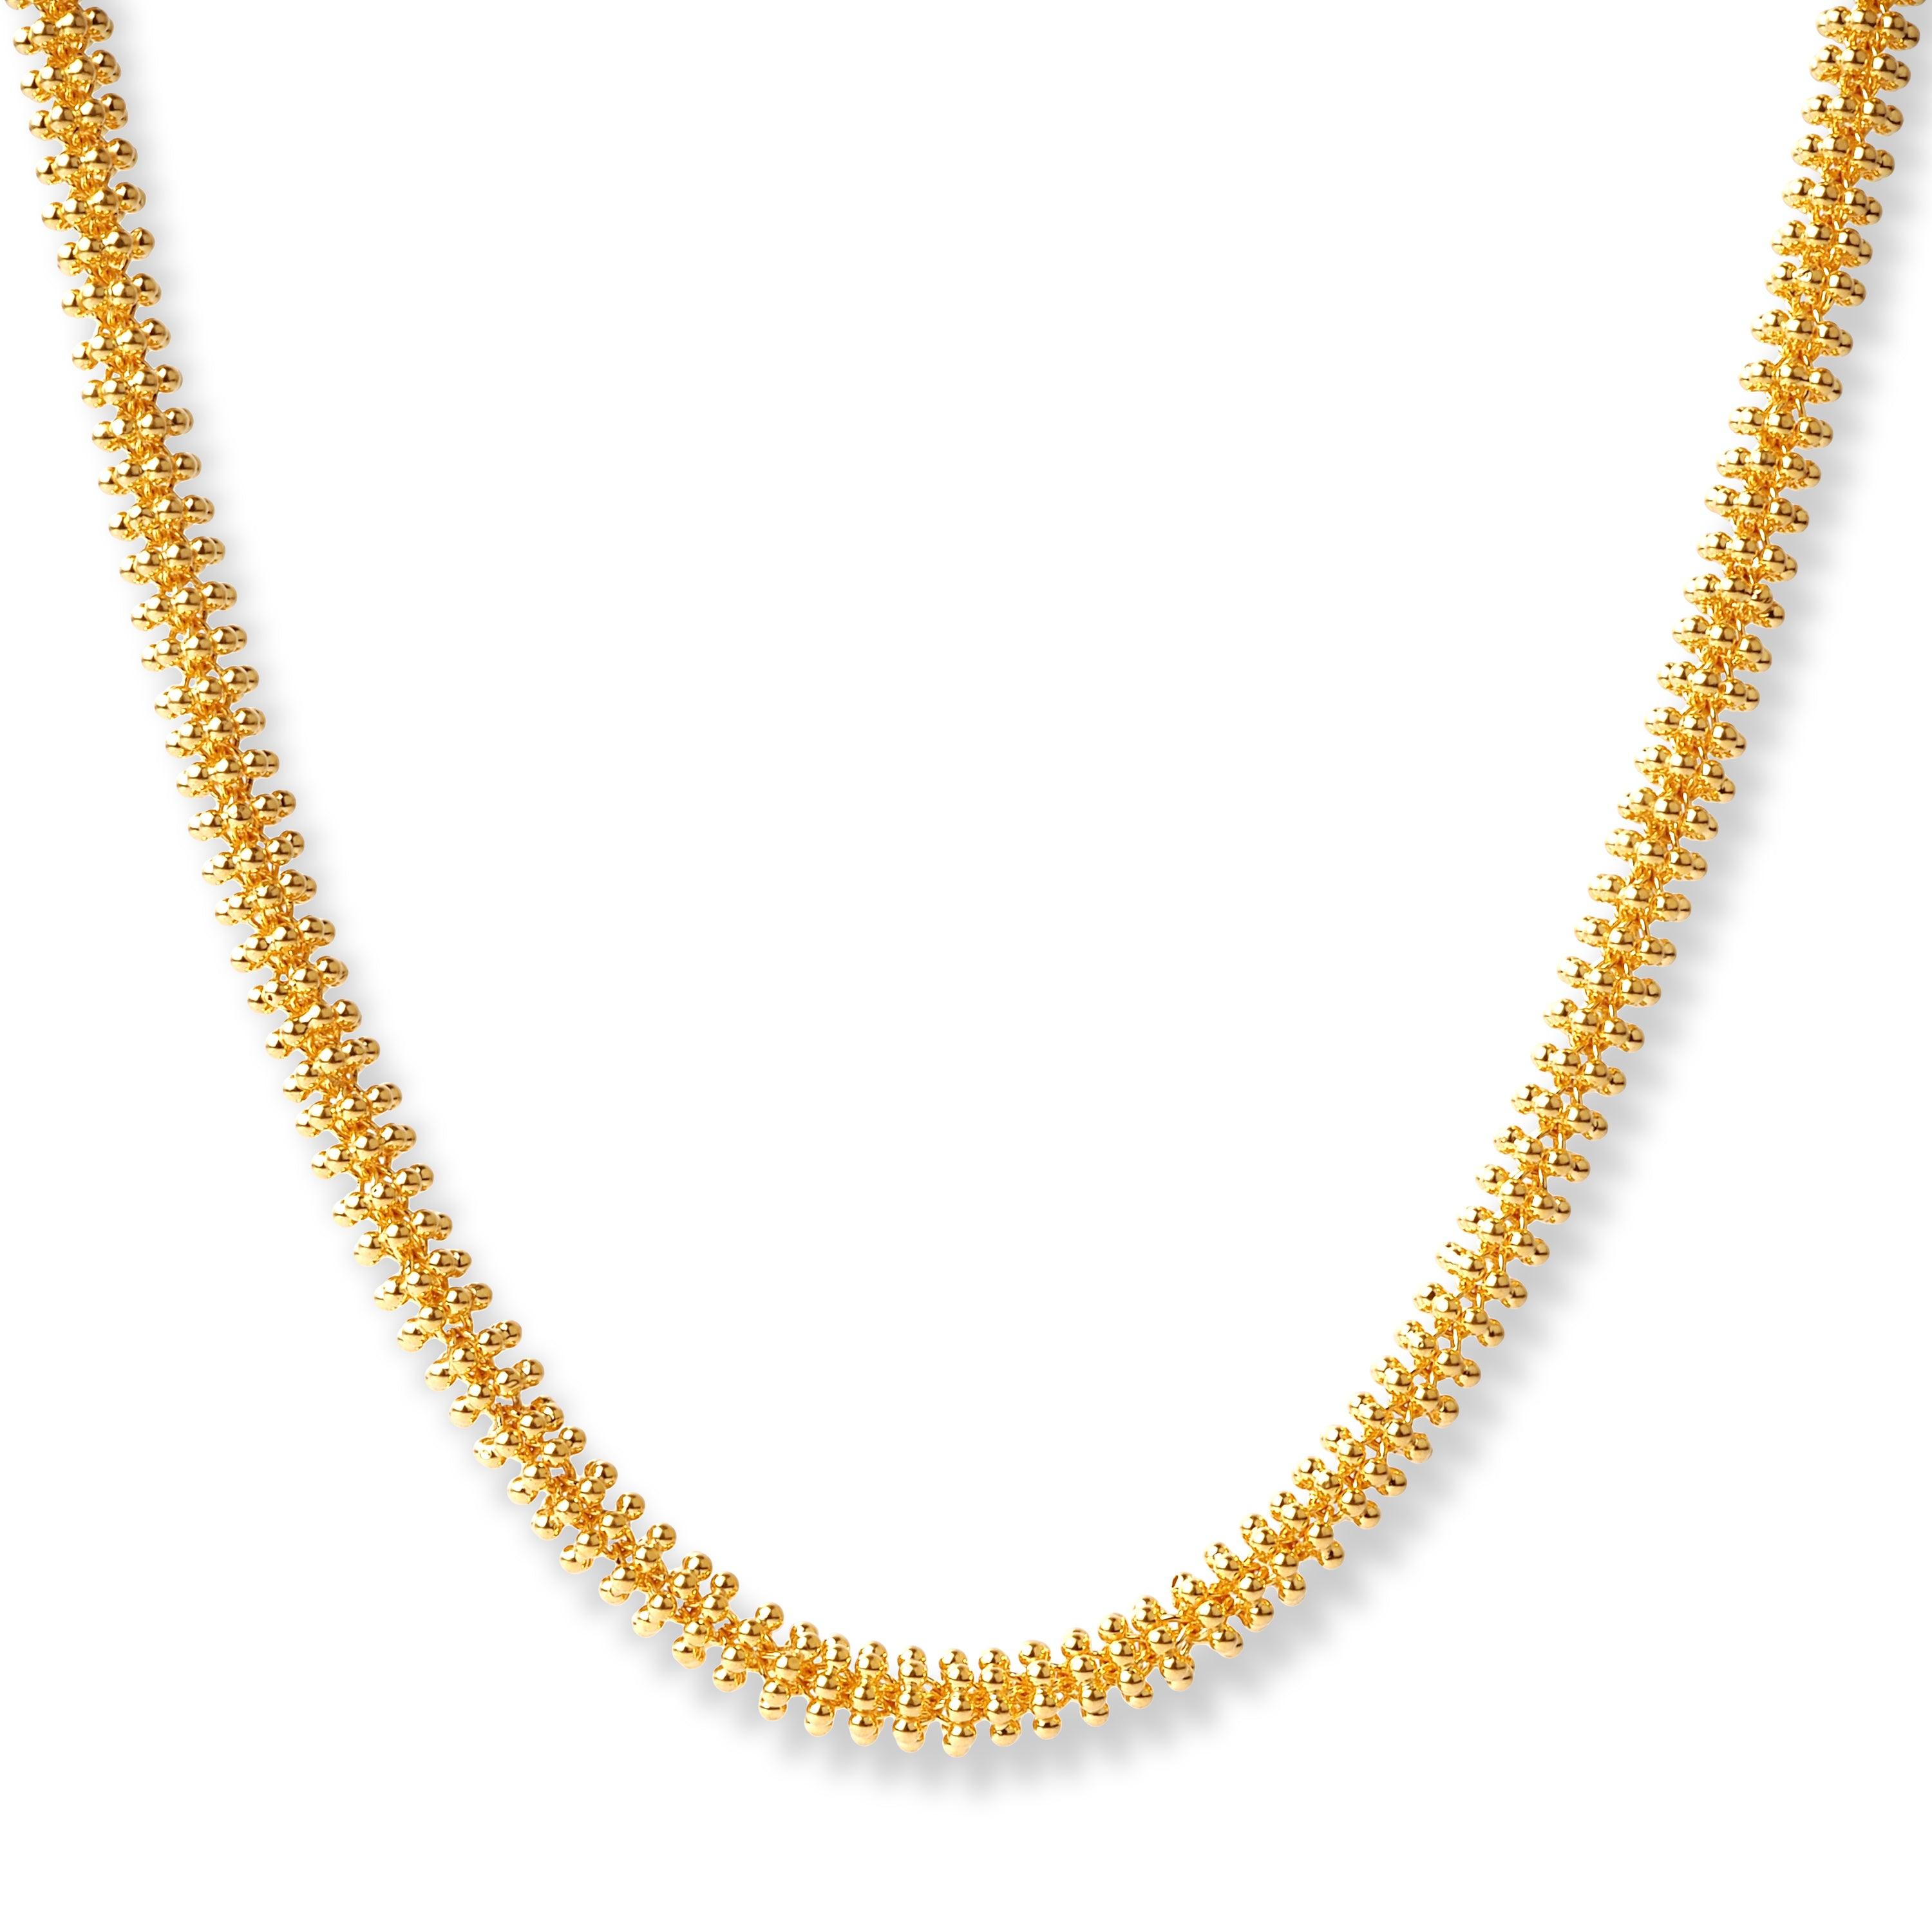 22ct Gold Long Beaded Mala Chain (46.8g) N-7883 - Minar Jewellers